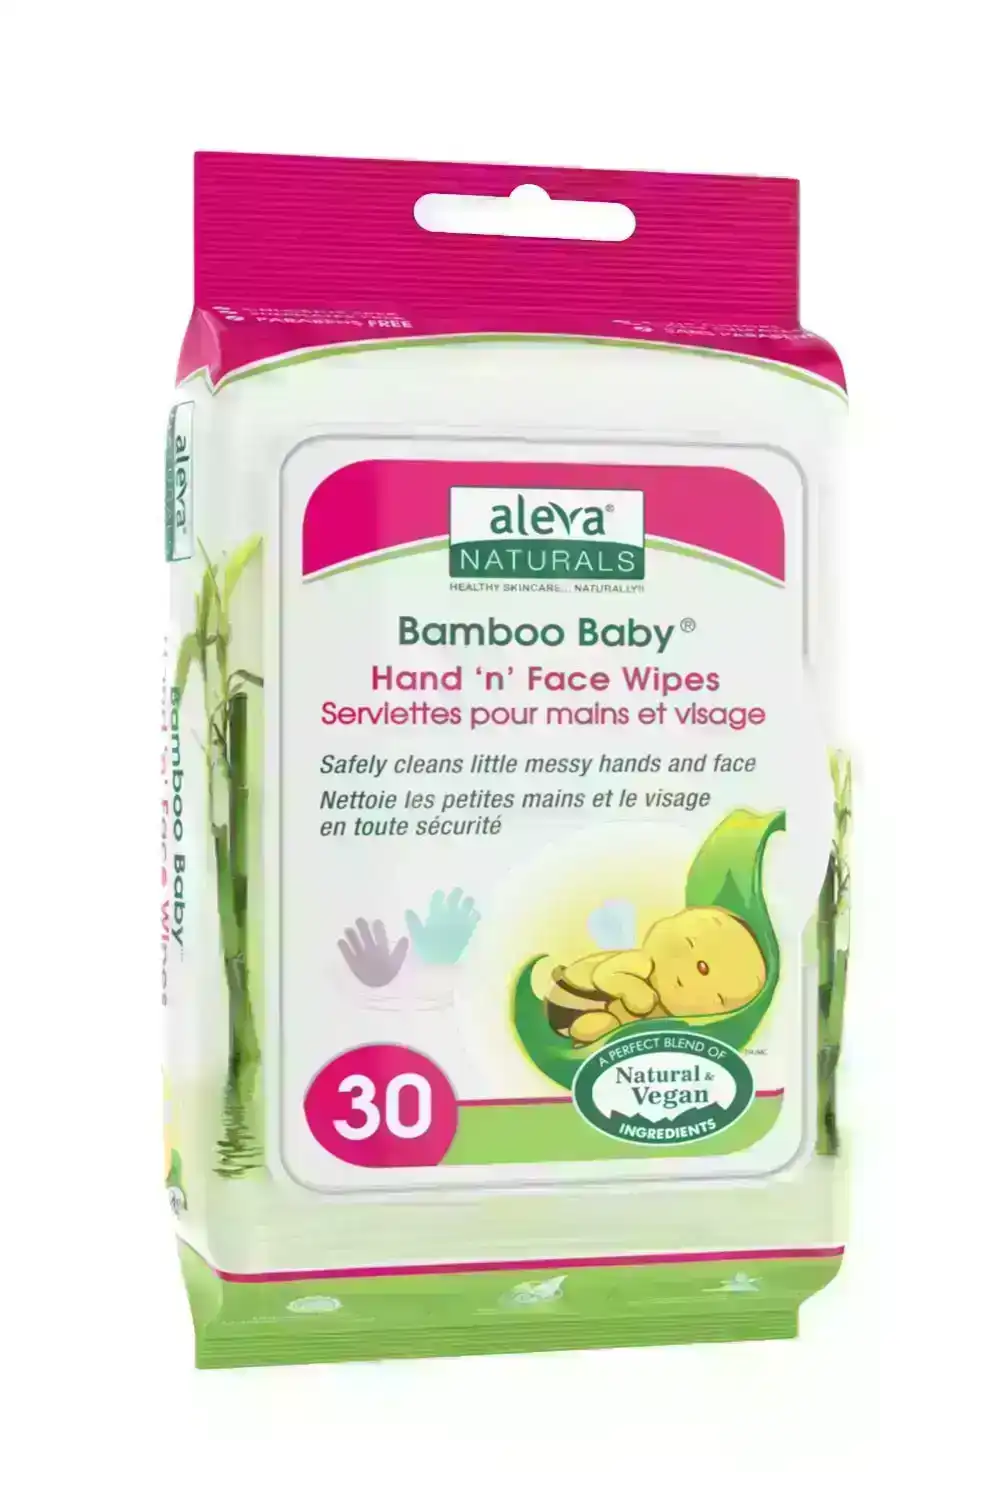 Aleva Organic/Vegan/Natural Bamboo Baby Hand 'n' Face Wipes - 30ct